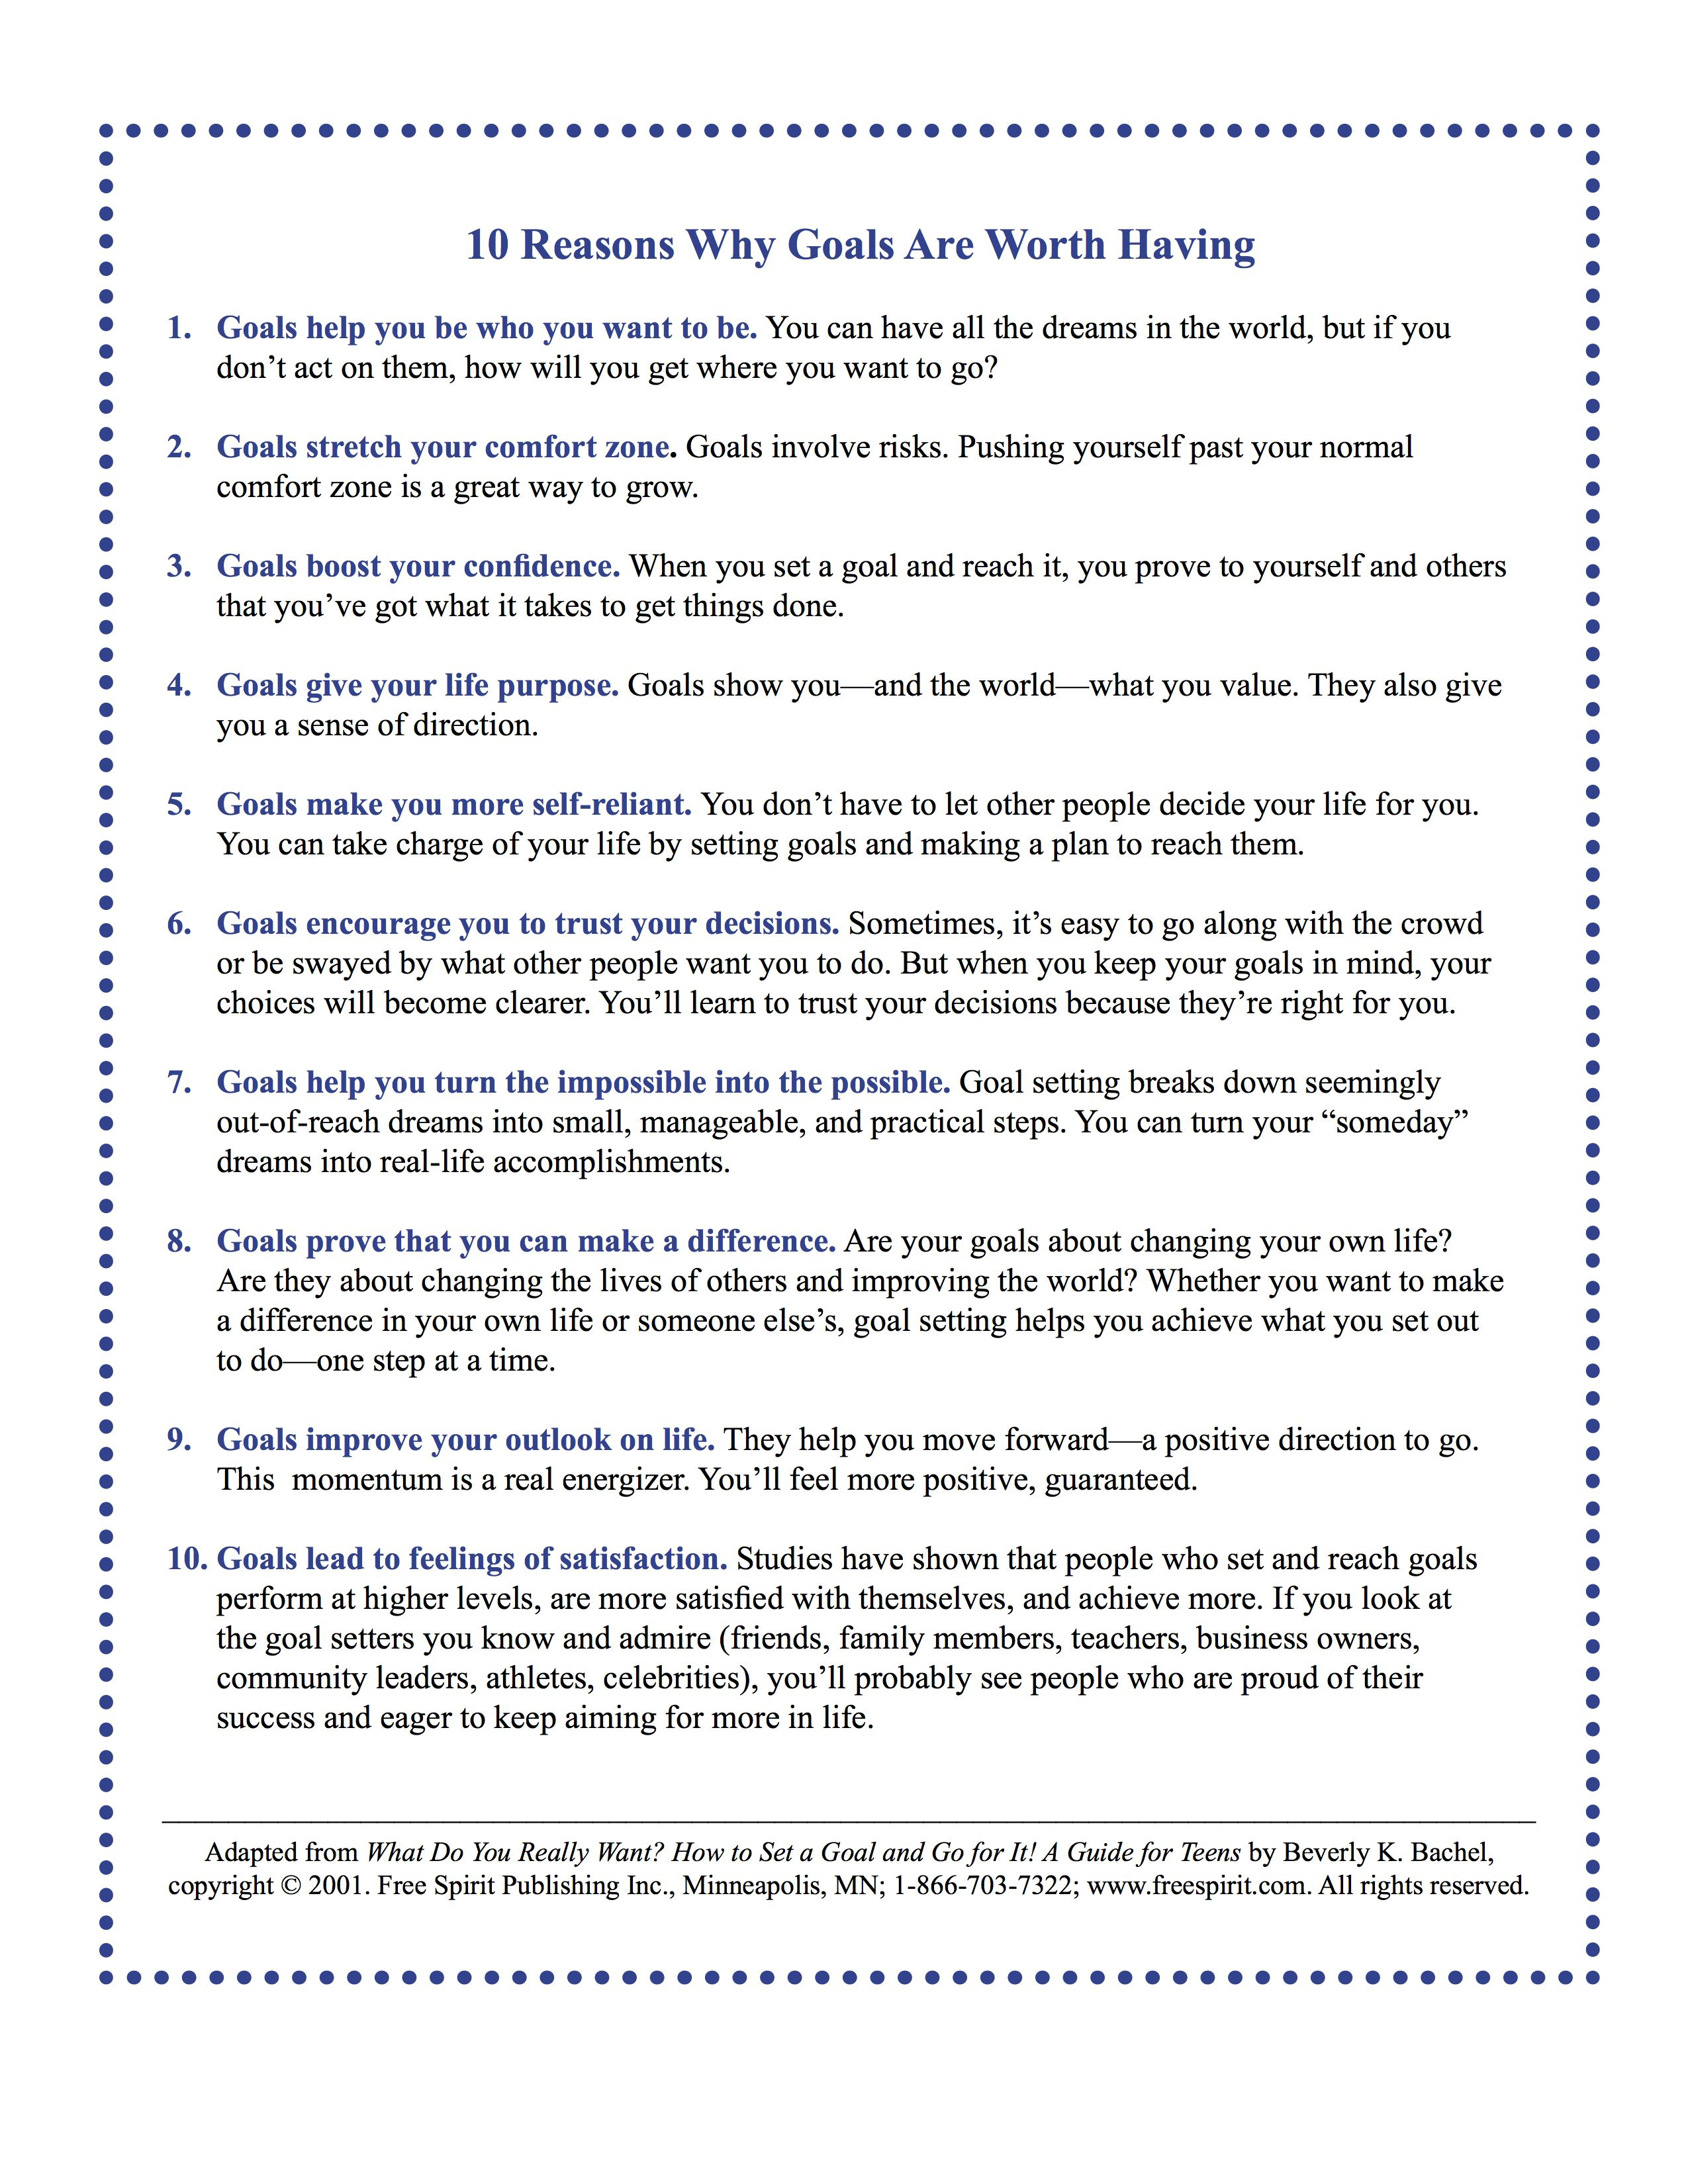 Free Printable Handout For Teachers, Counselors, And Parents: 10 - Free Printable Patient Education Handouts